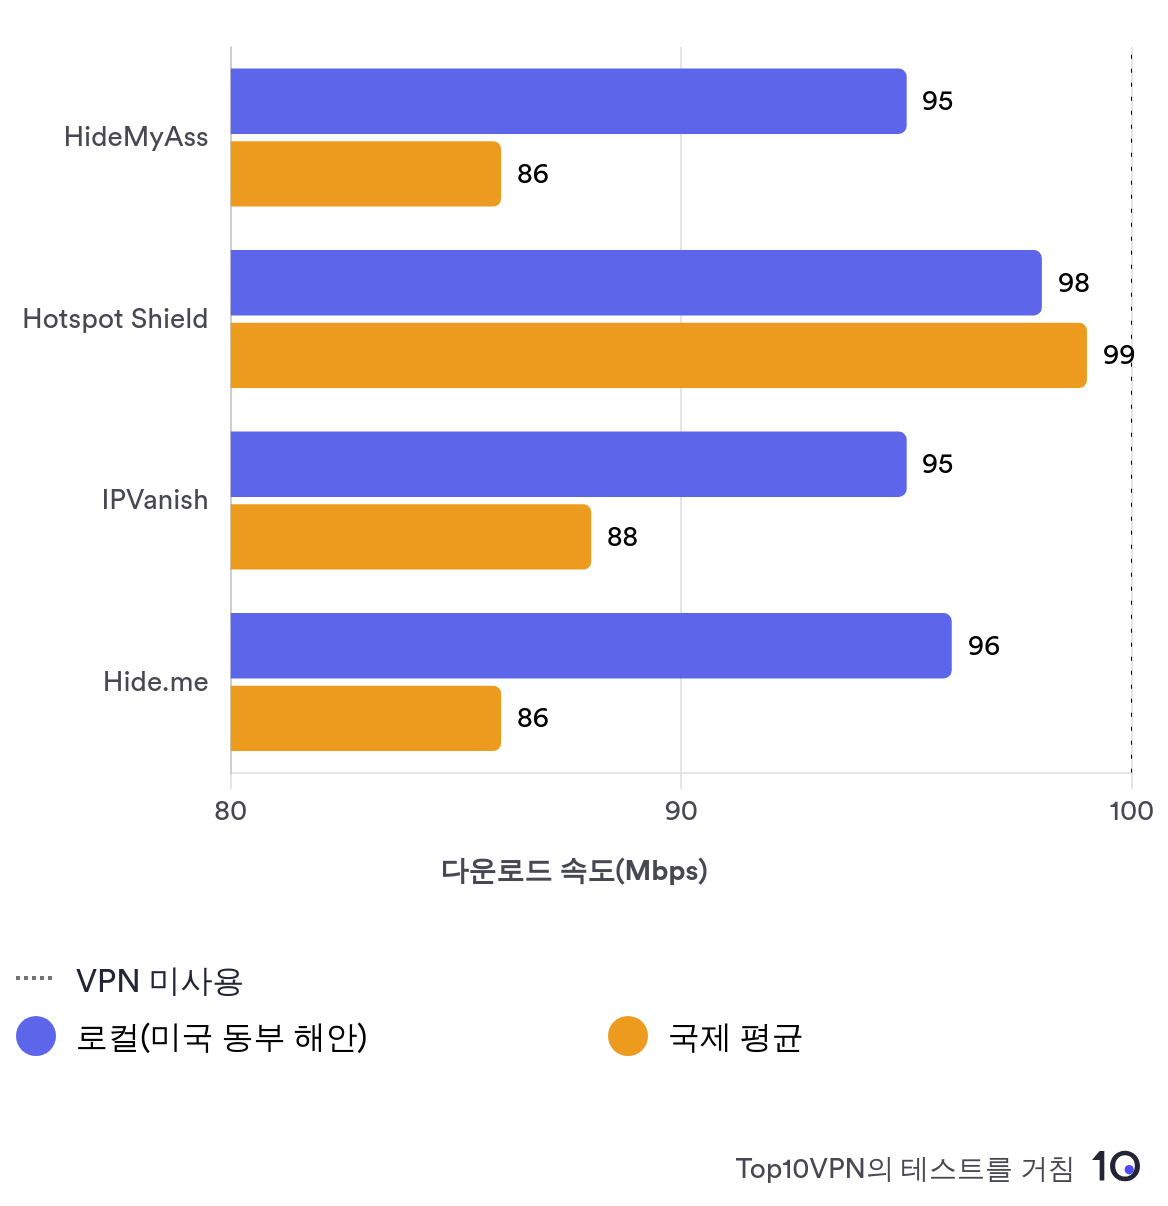 HMA와 빠른 속도를 가진 다른 VPN의 로컬 및 해외 연결 속도를 비교하는 차트